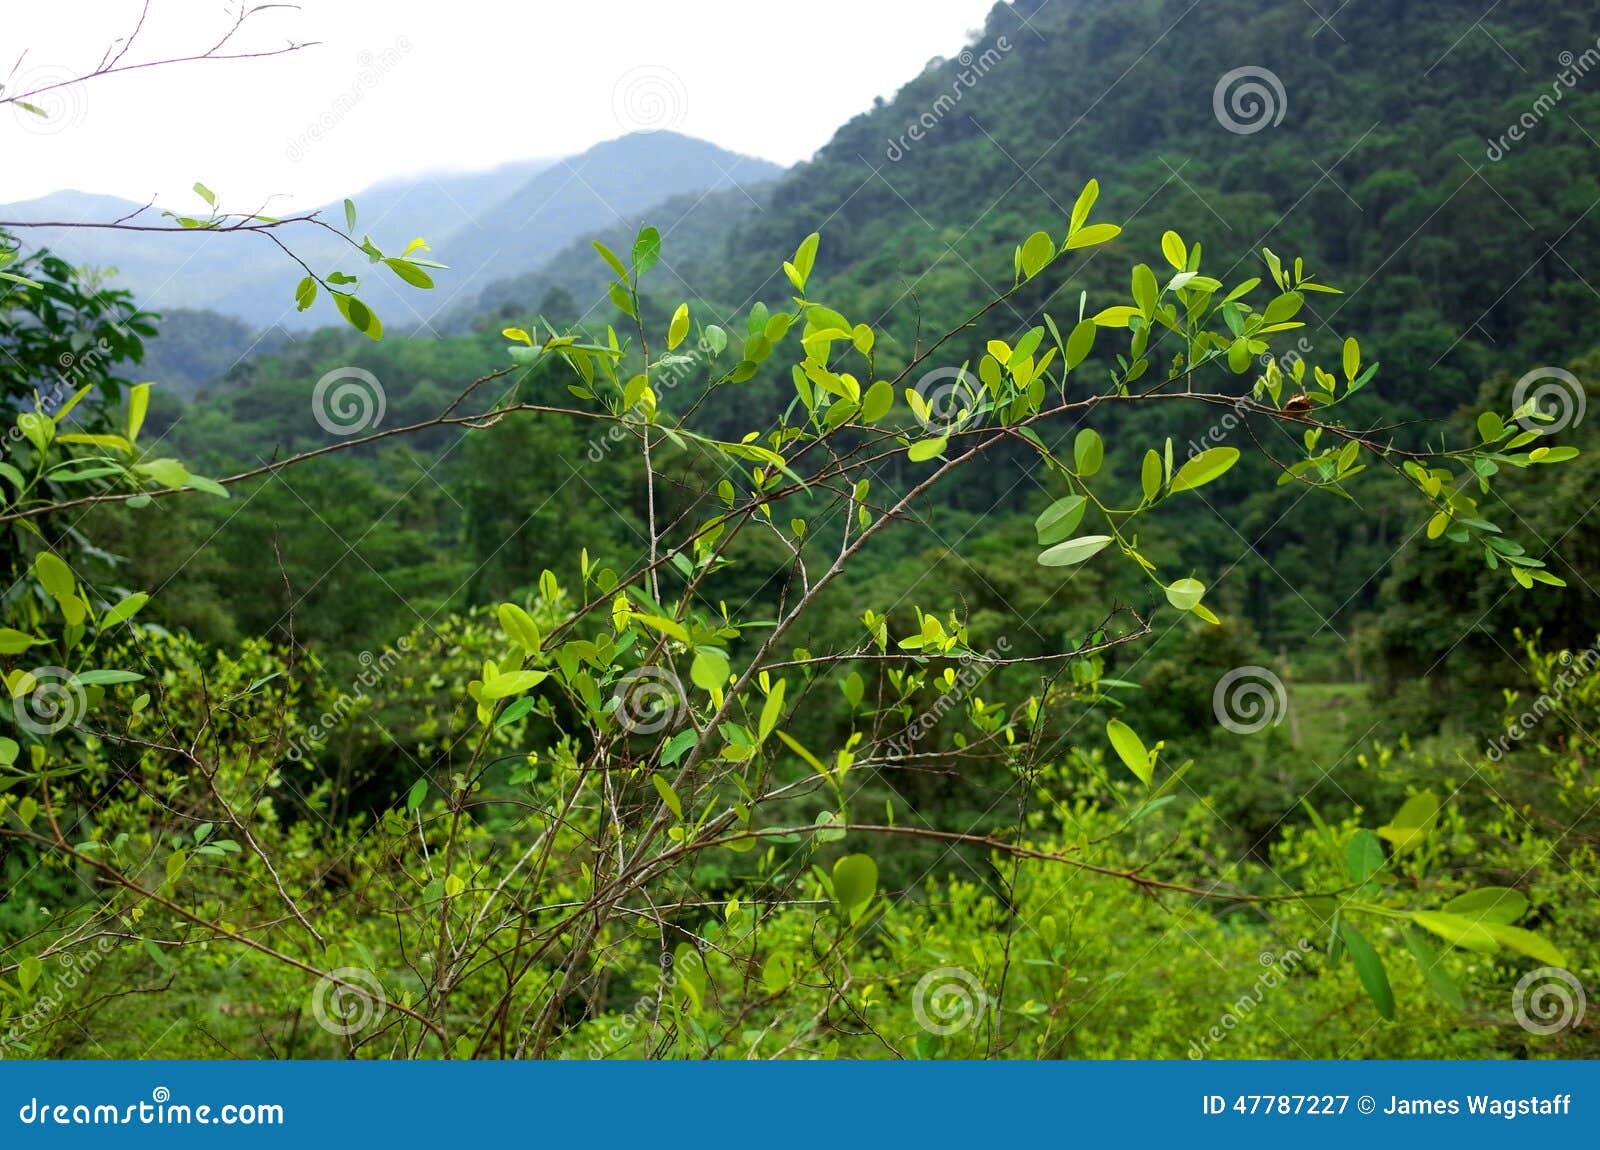 coca plantation